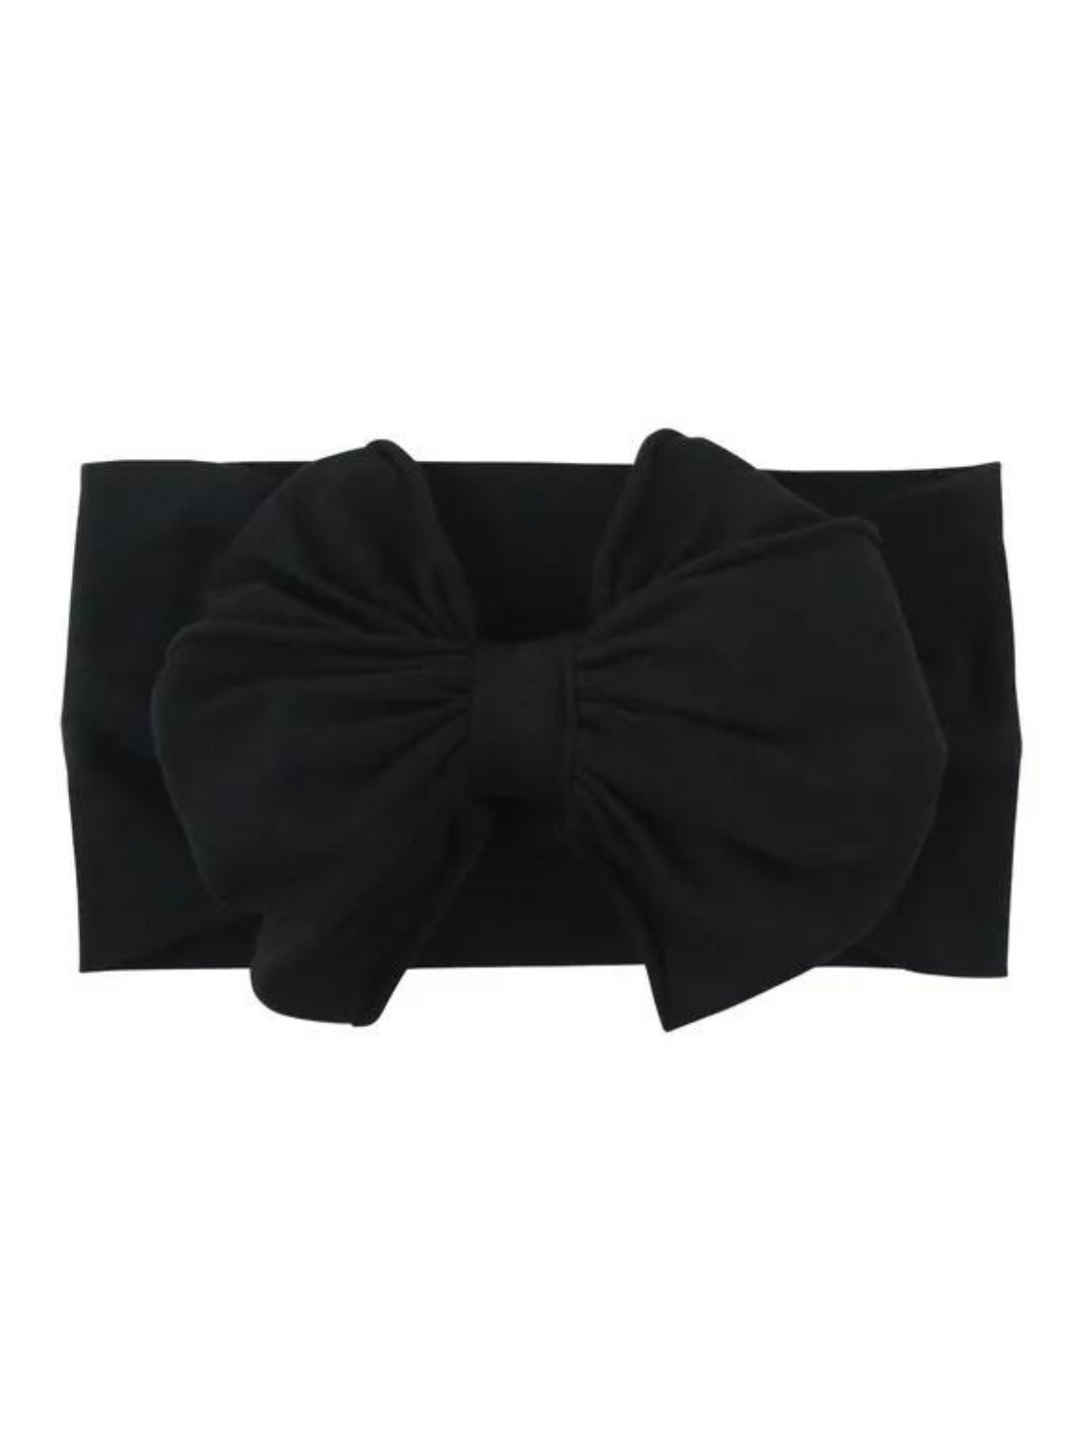 Black Big Bow Headband | Ruffle Butts